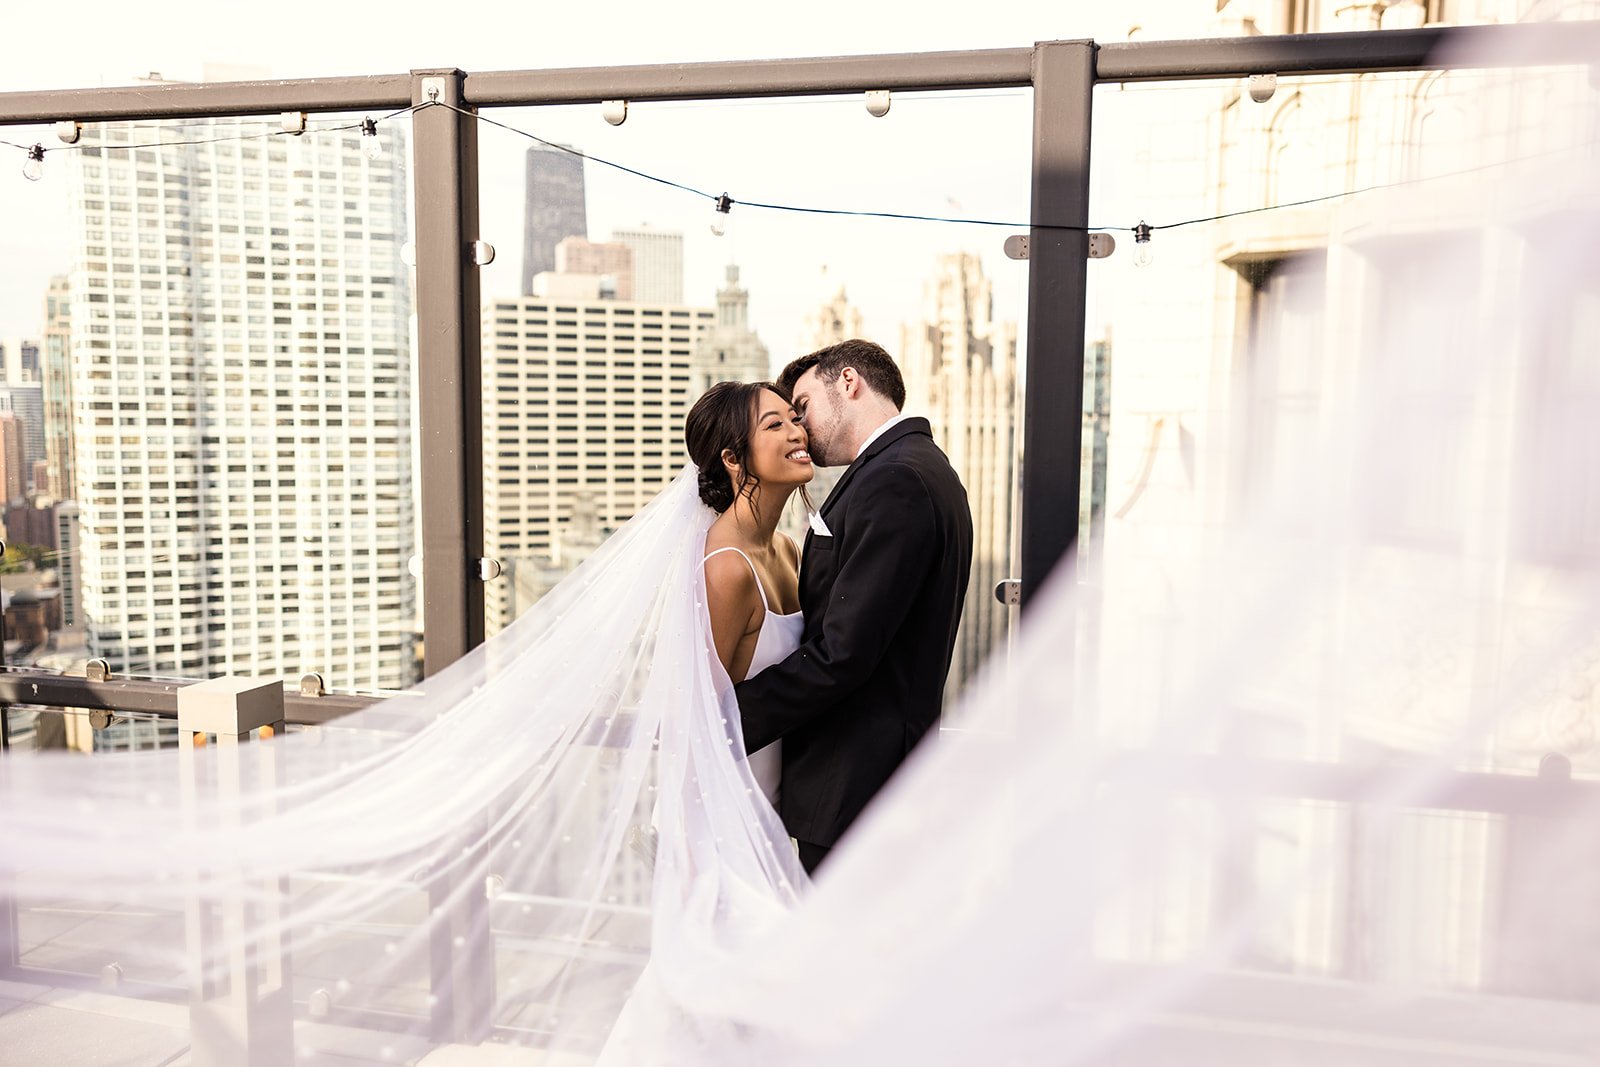 Royal-Sonesta-Chicago-Downtown-wedding-by-Emma-Mullins-Photography-90.jpg